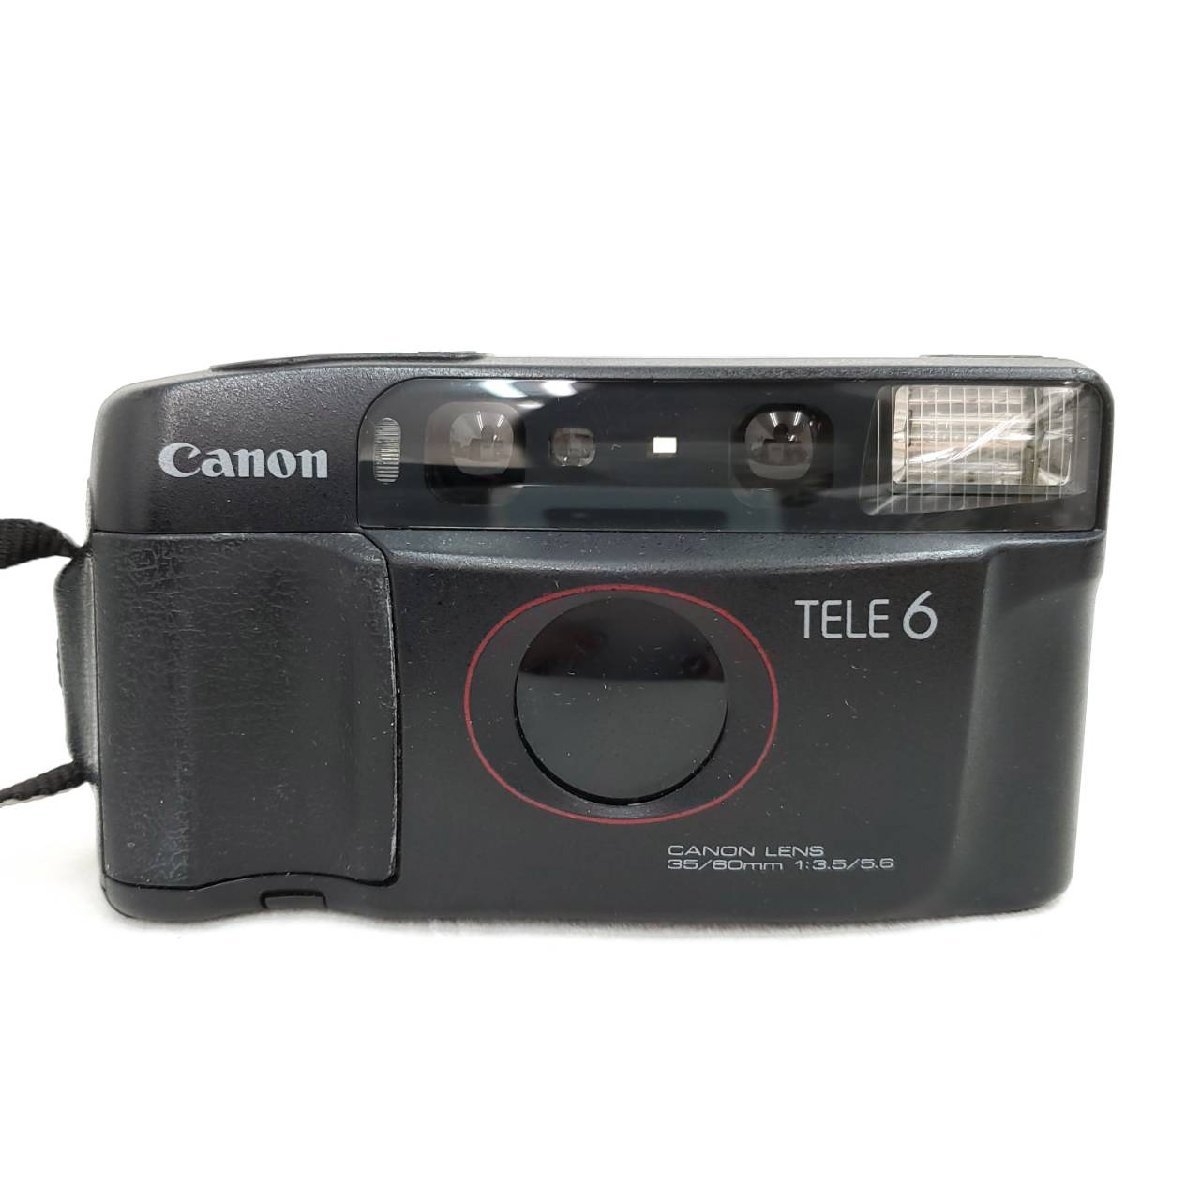 CANON キャノン Autoboy TELE 6 フィルムカメラ 【海外 正規品】 62.0